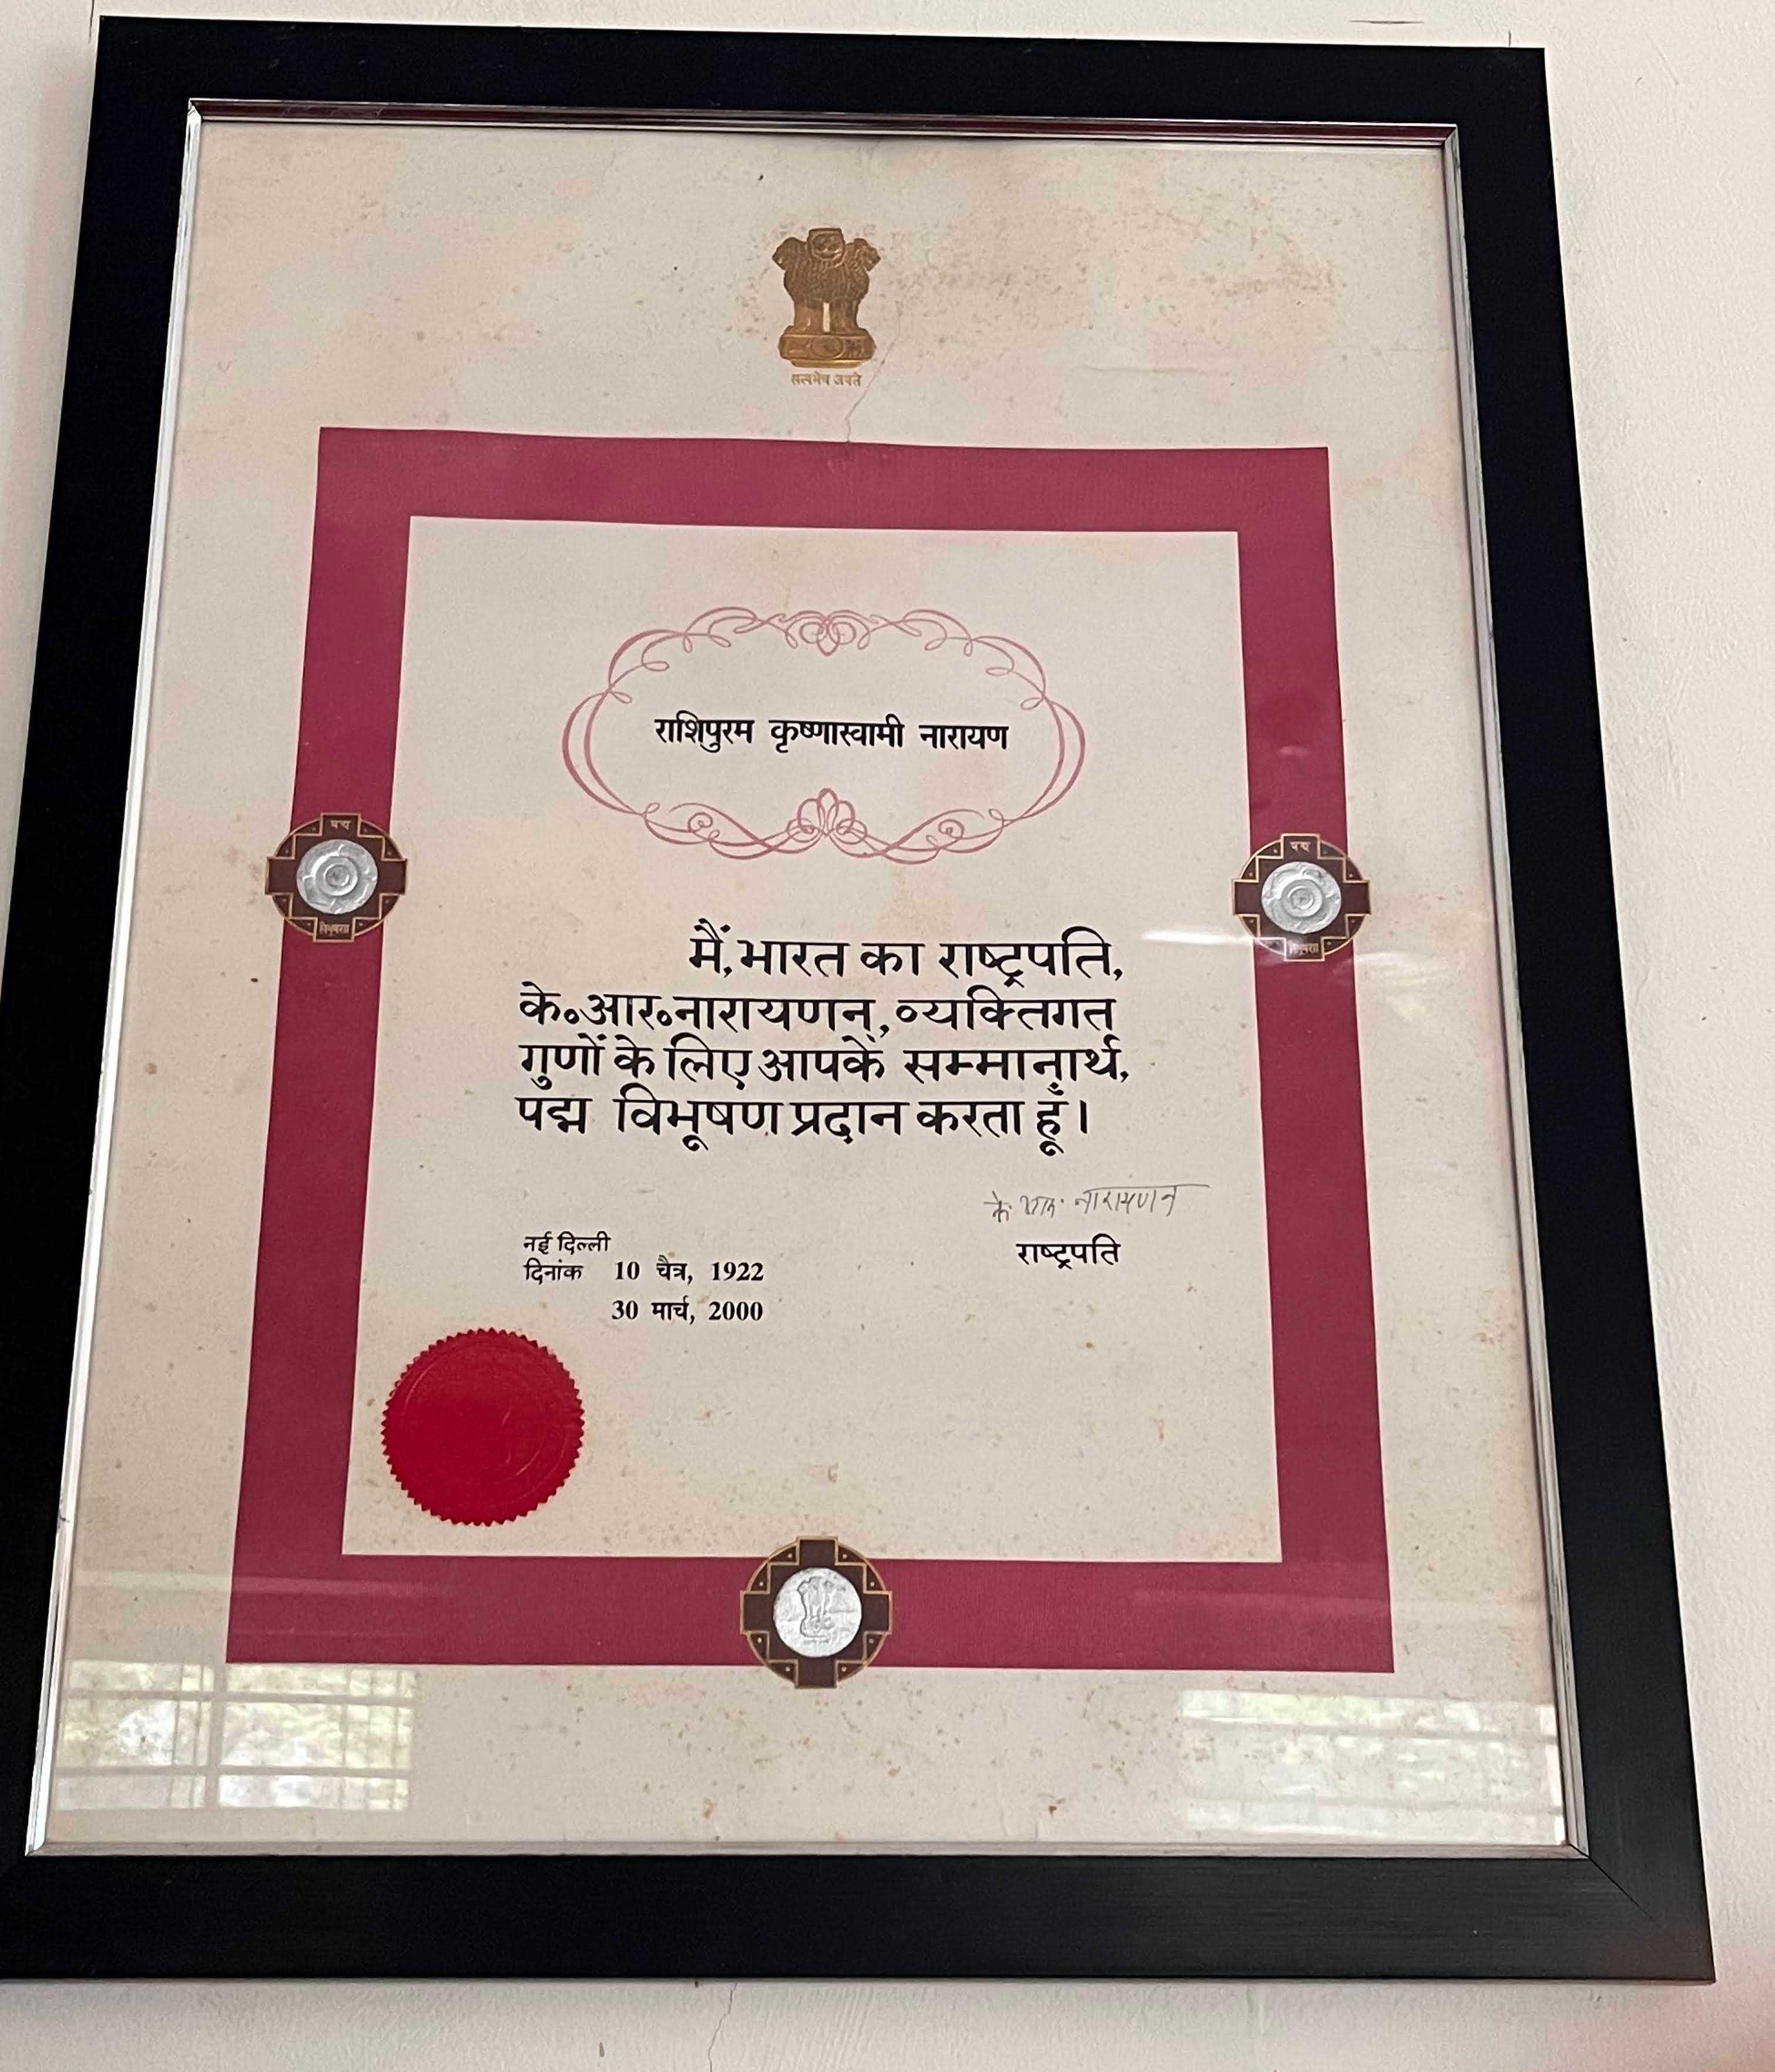 <b>The Padma Vibhushan that Narayan received in 2000</b>